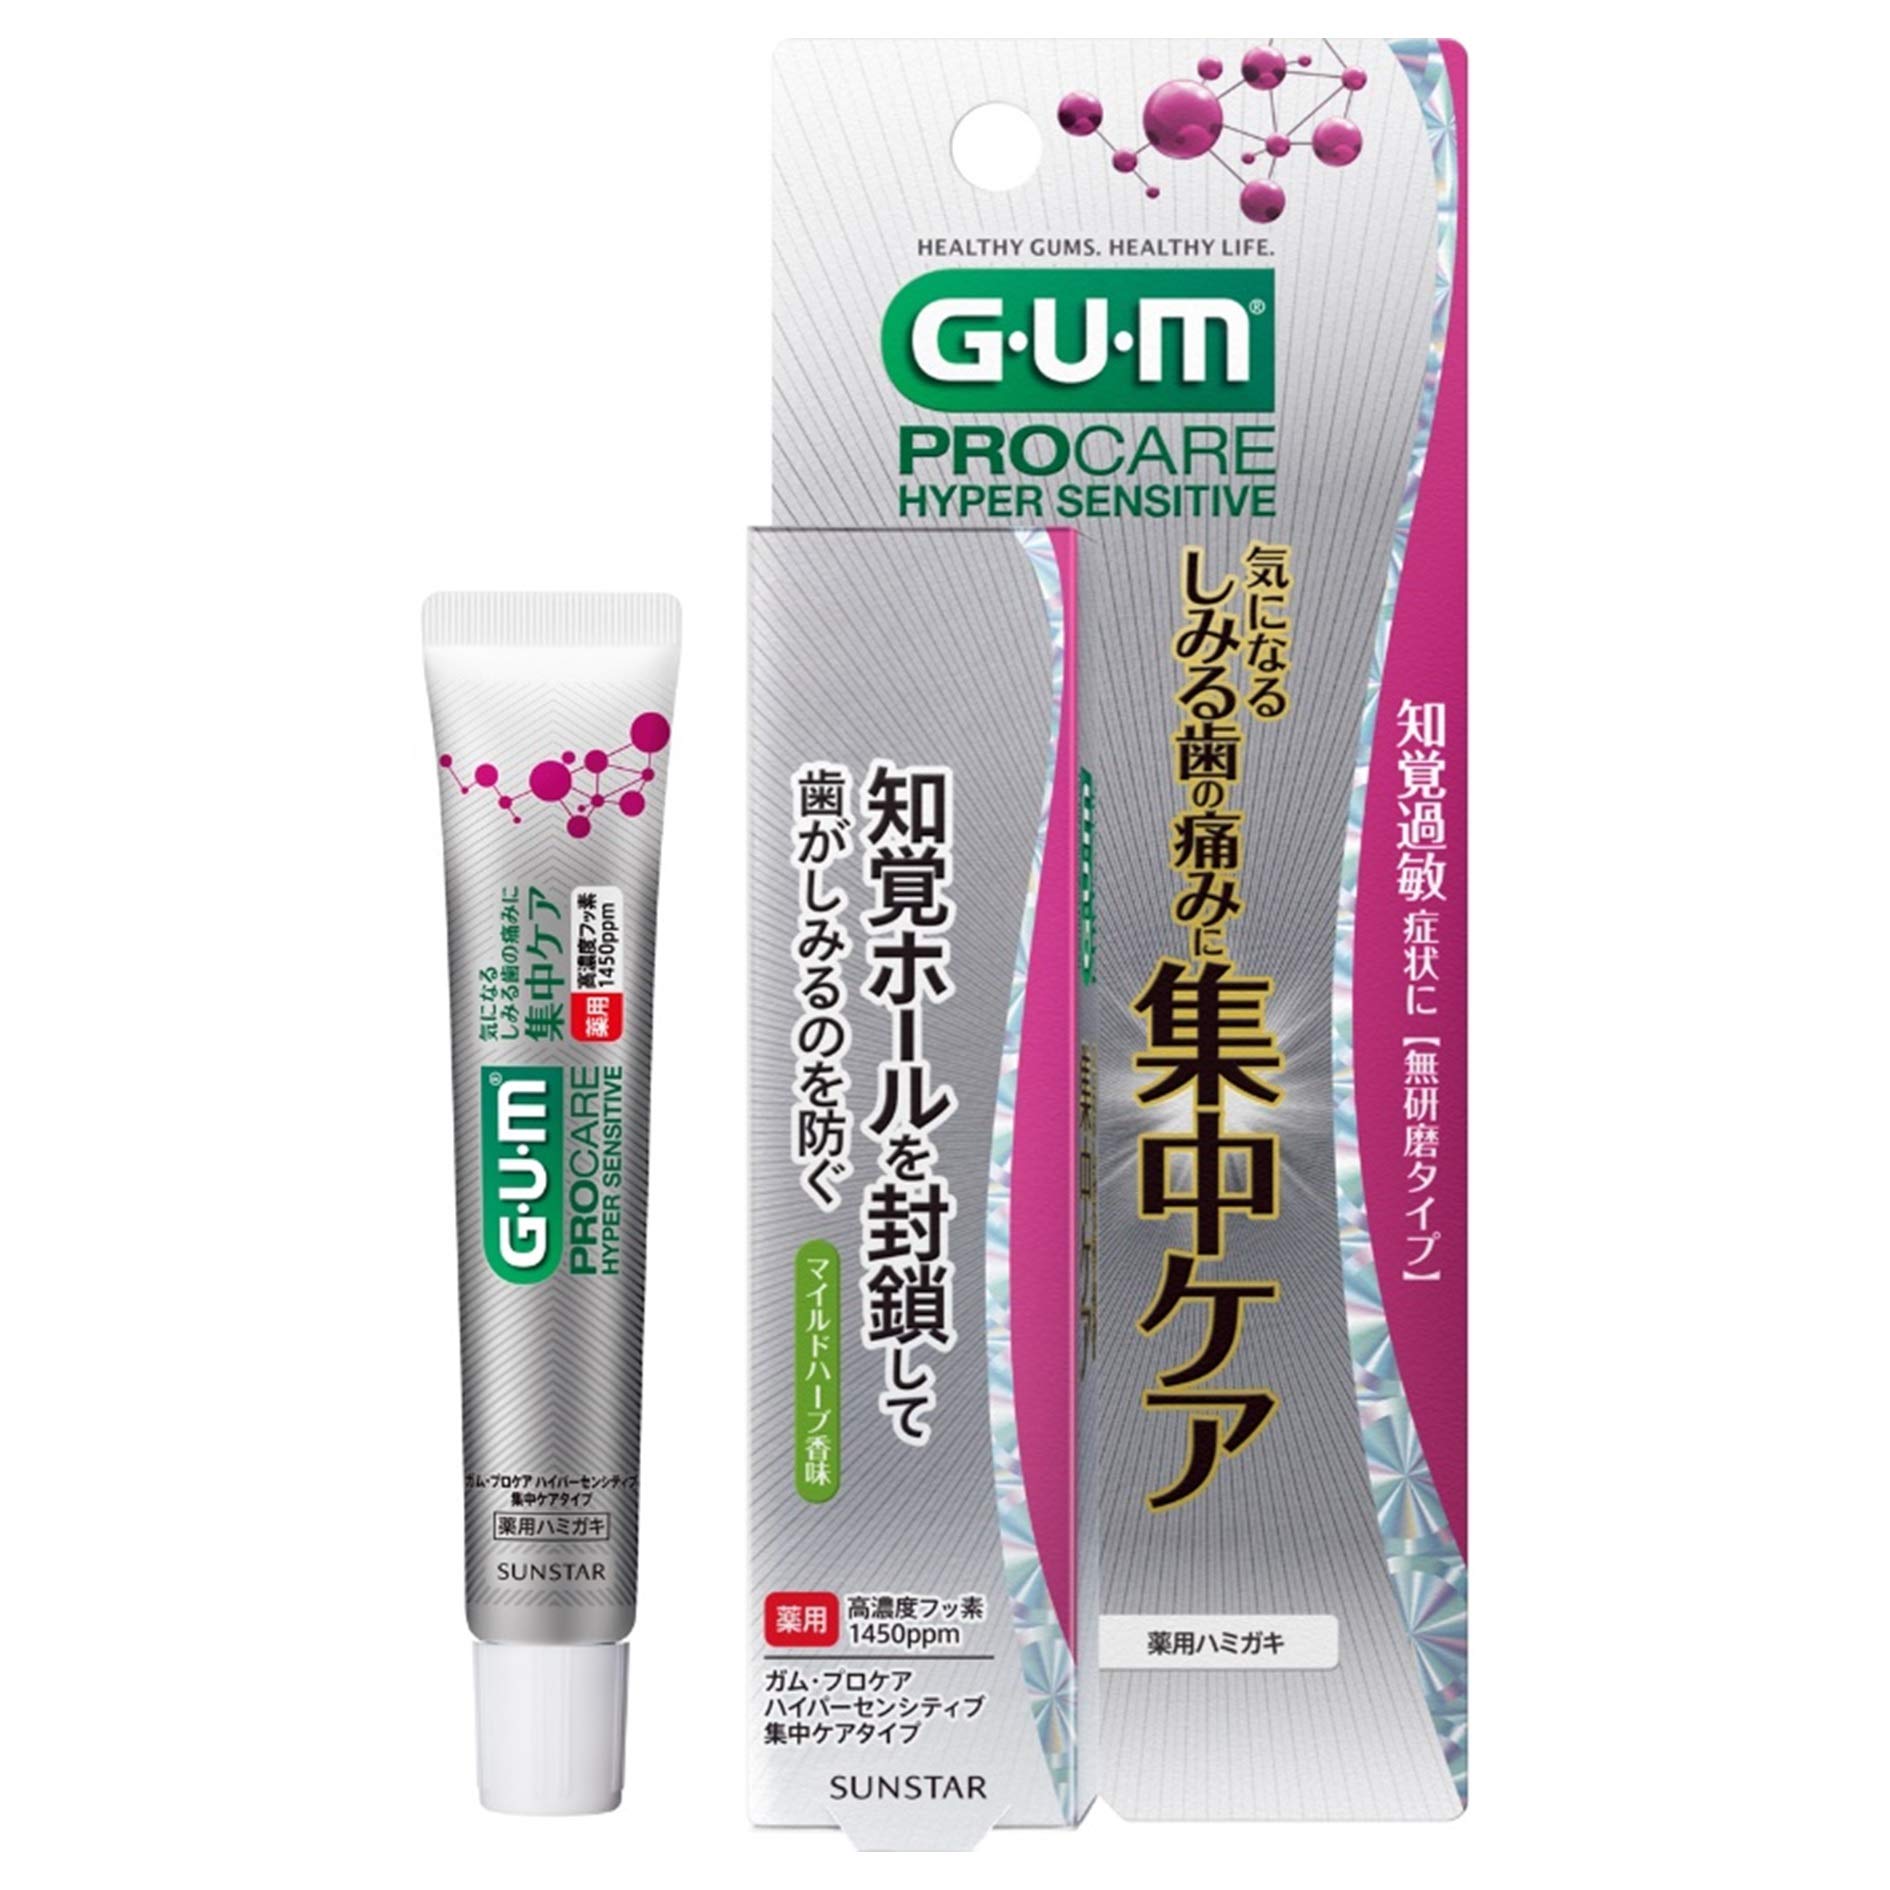 Sunstar Gum Pro Care Hyper Sensitive Intensive Care - 15g